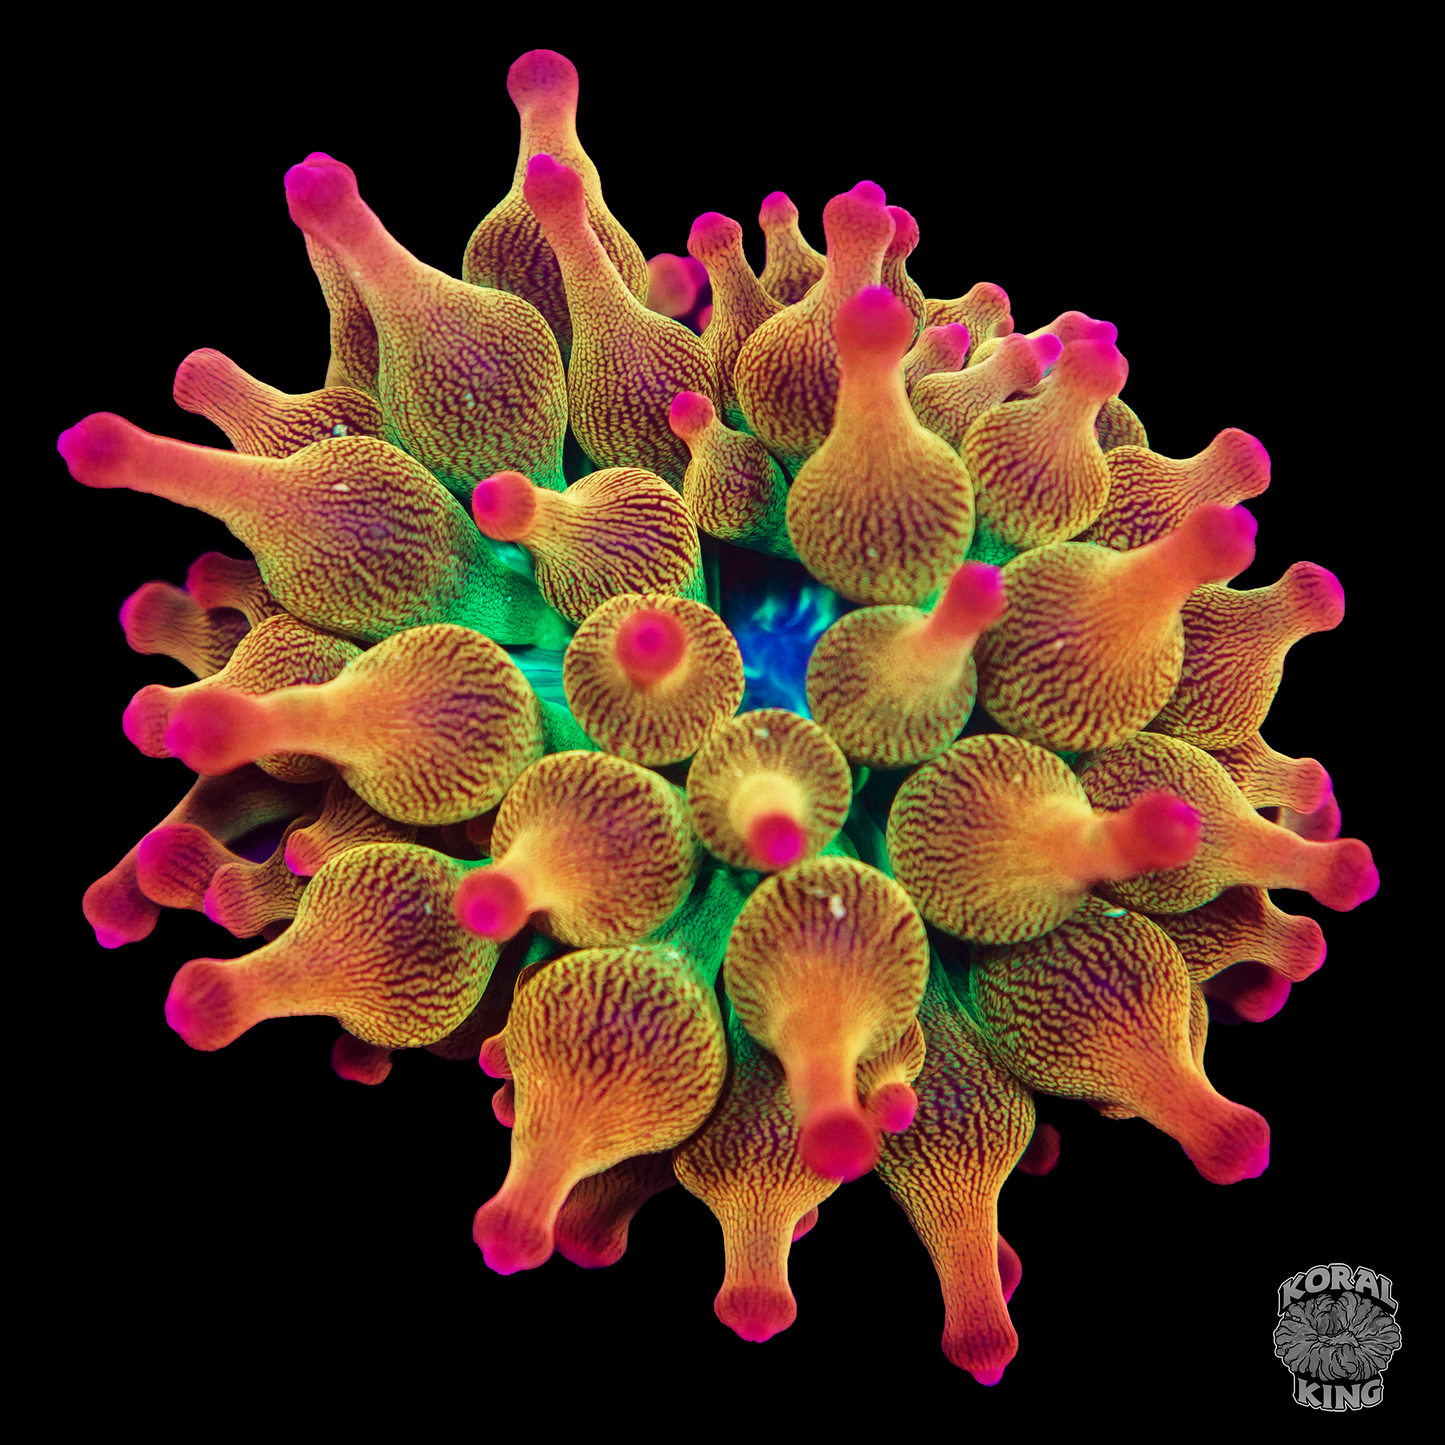 Rainbow Bubble Tip Anemone - Koral King